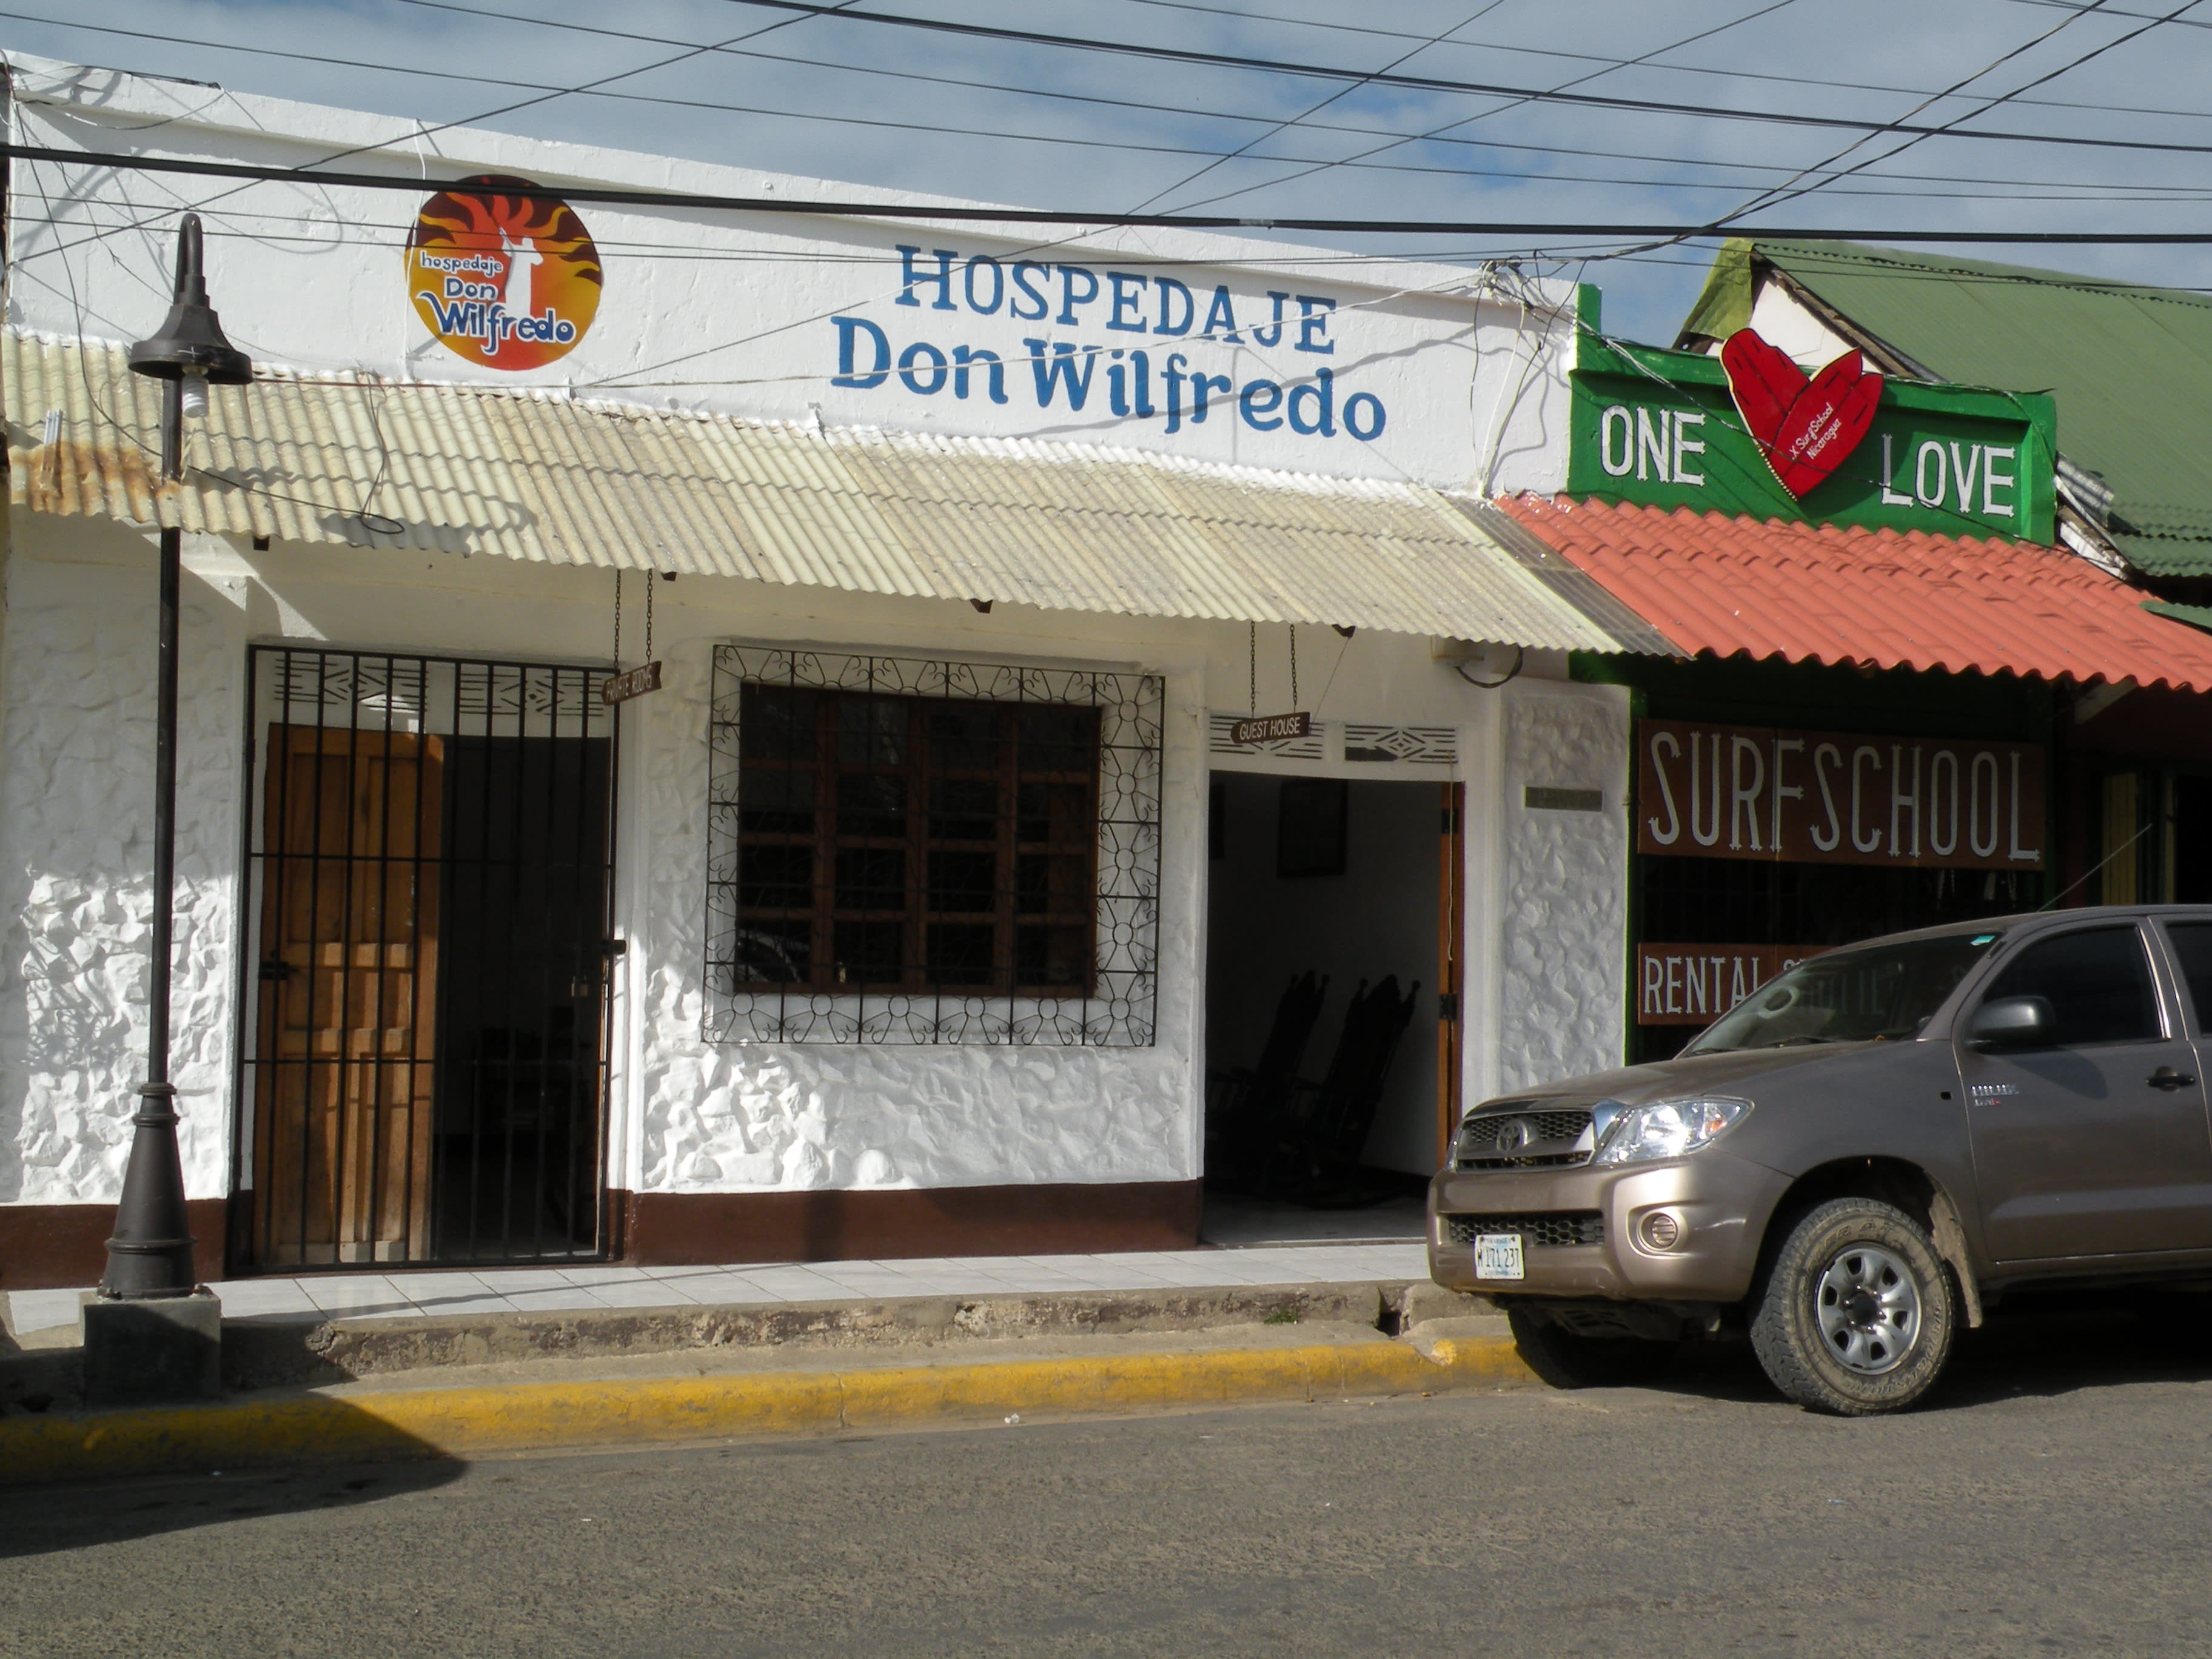 Hospedaje Don Wilfredo - San Juan del Sur